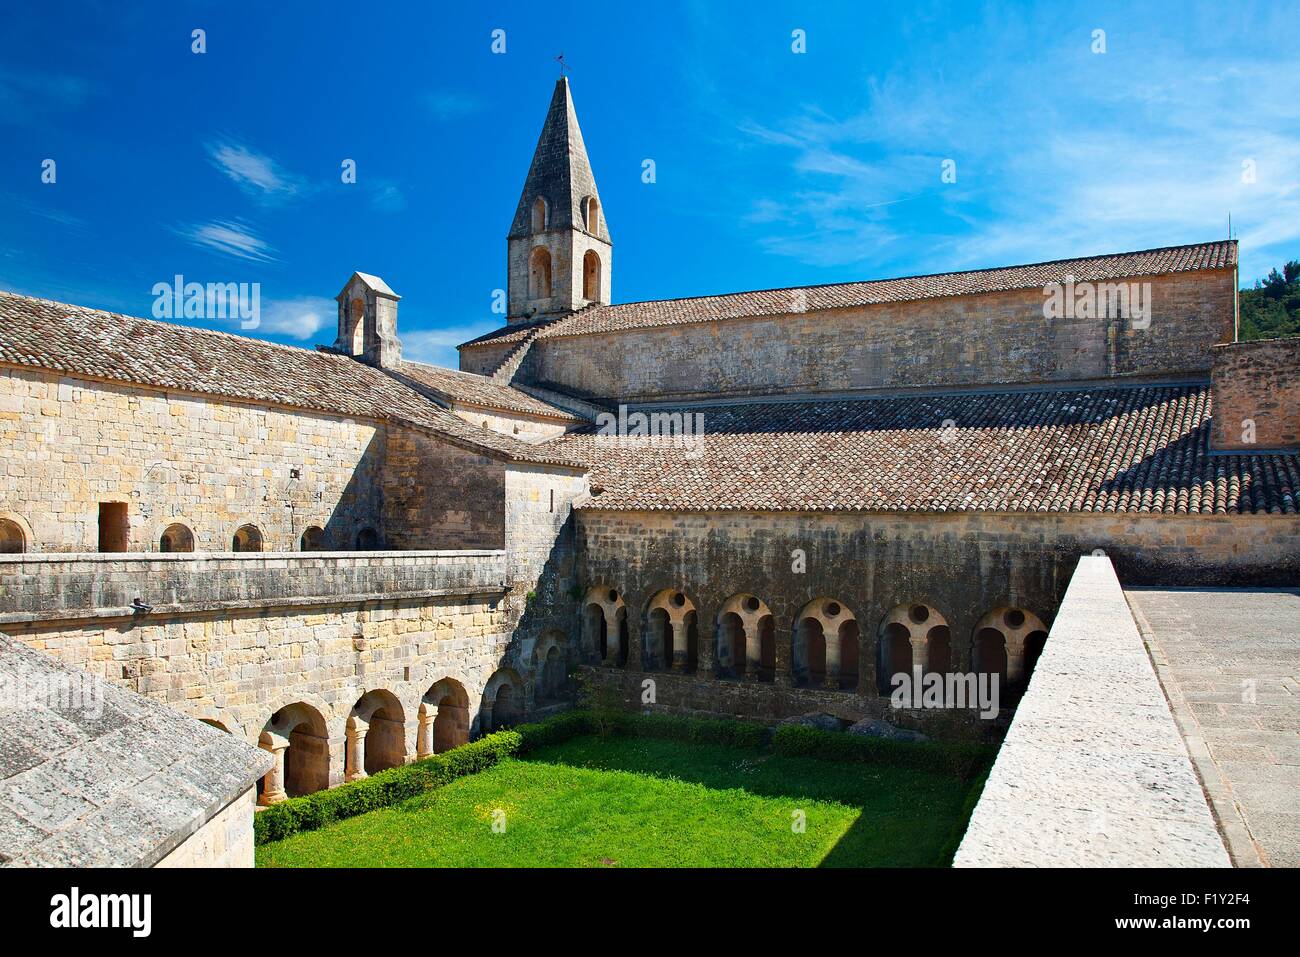 La France, Var, l'abbaye cistercienne du Thoronet Banque D'Images